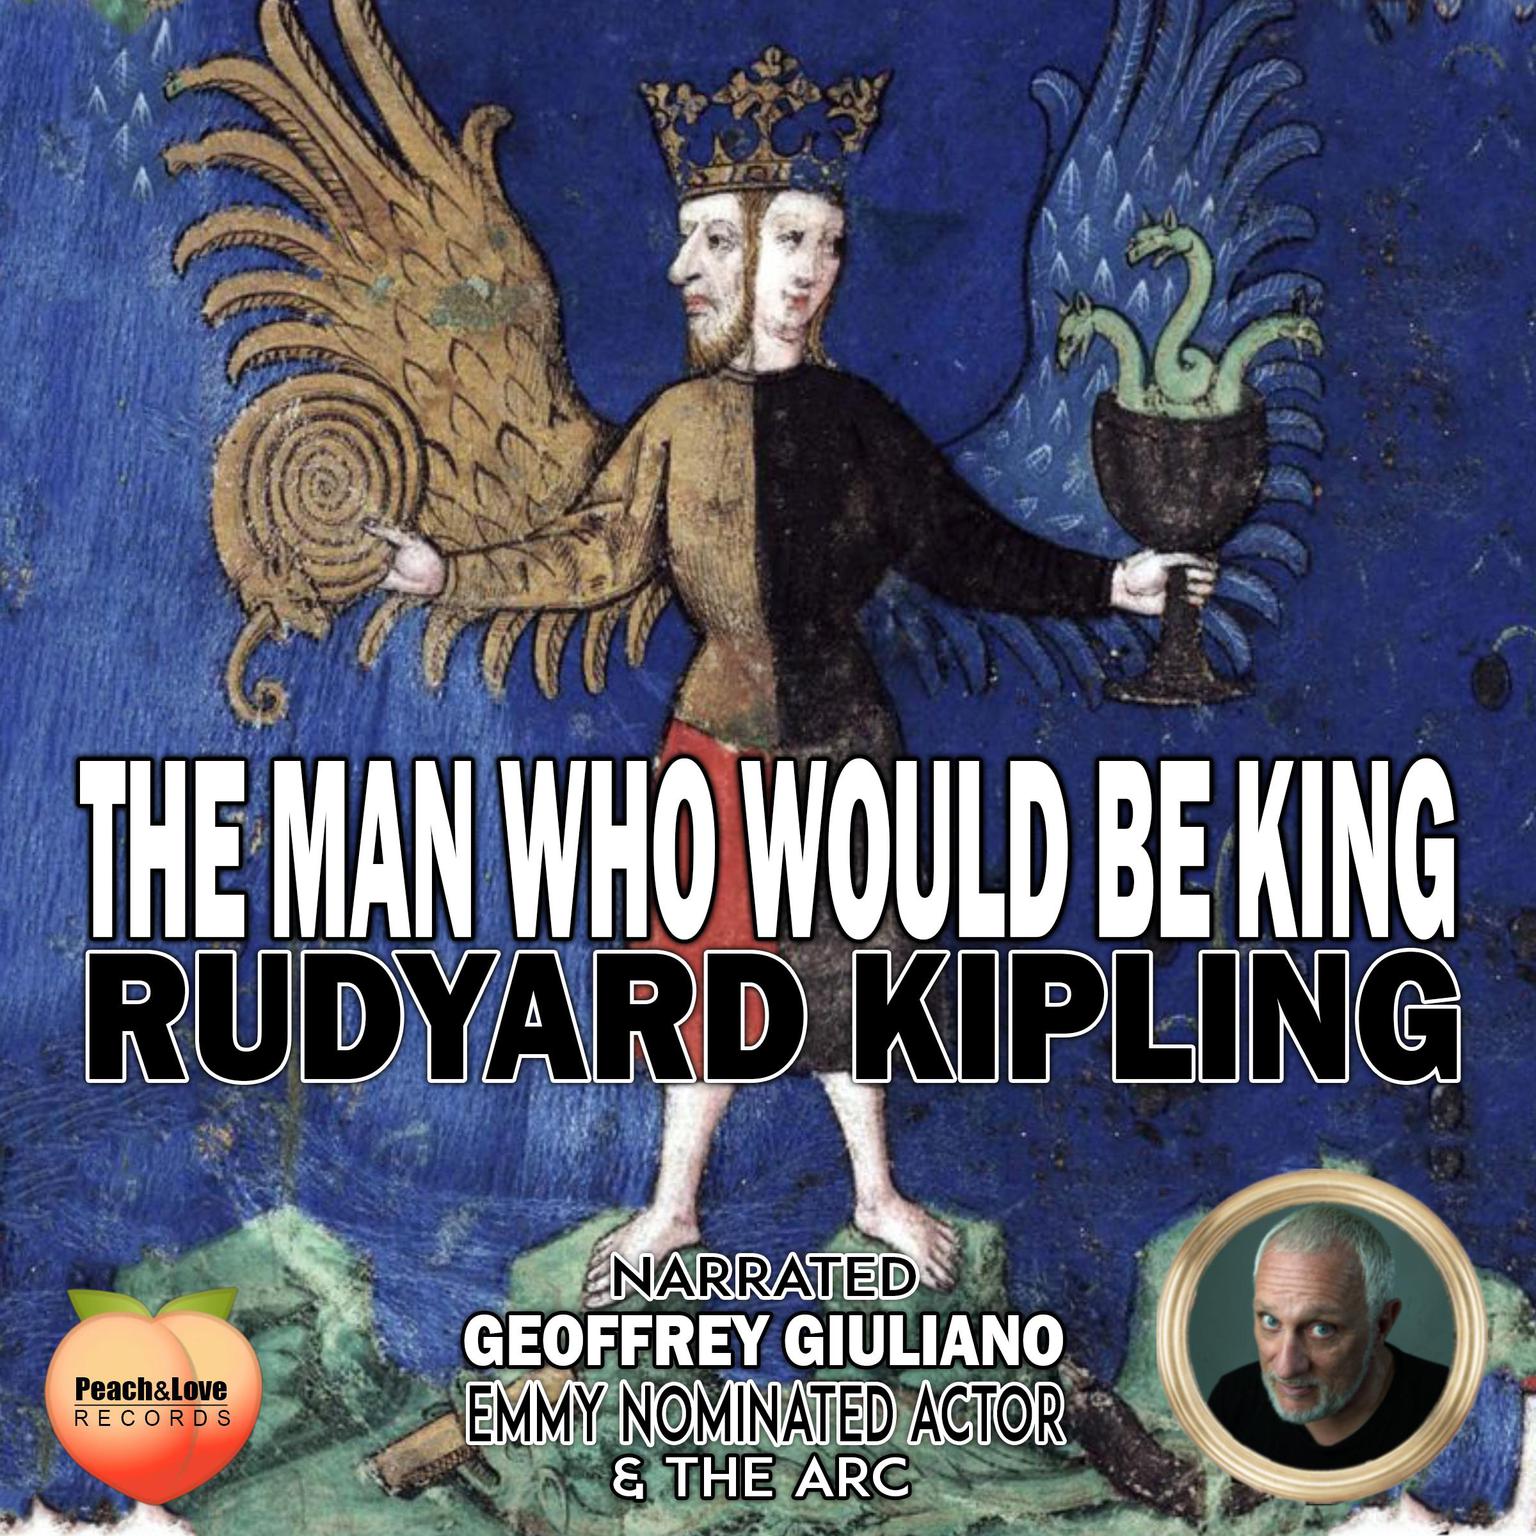 The Man Who Would Be King Audiobook, by Rudyard Kipling